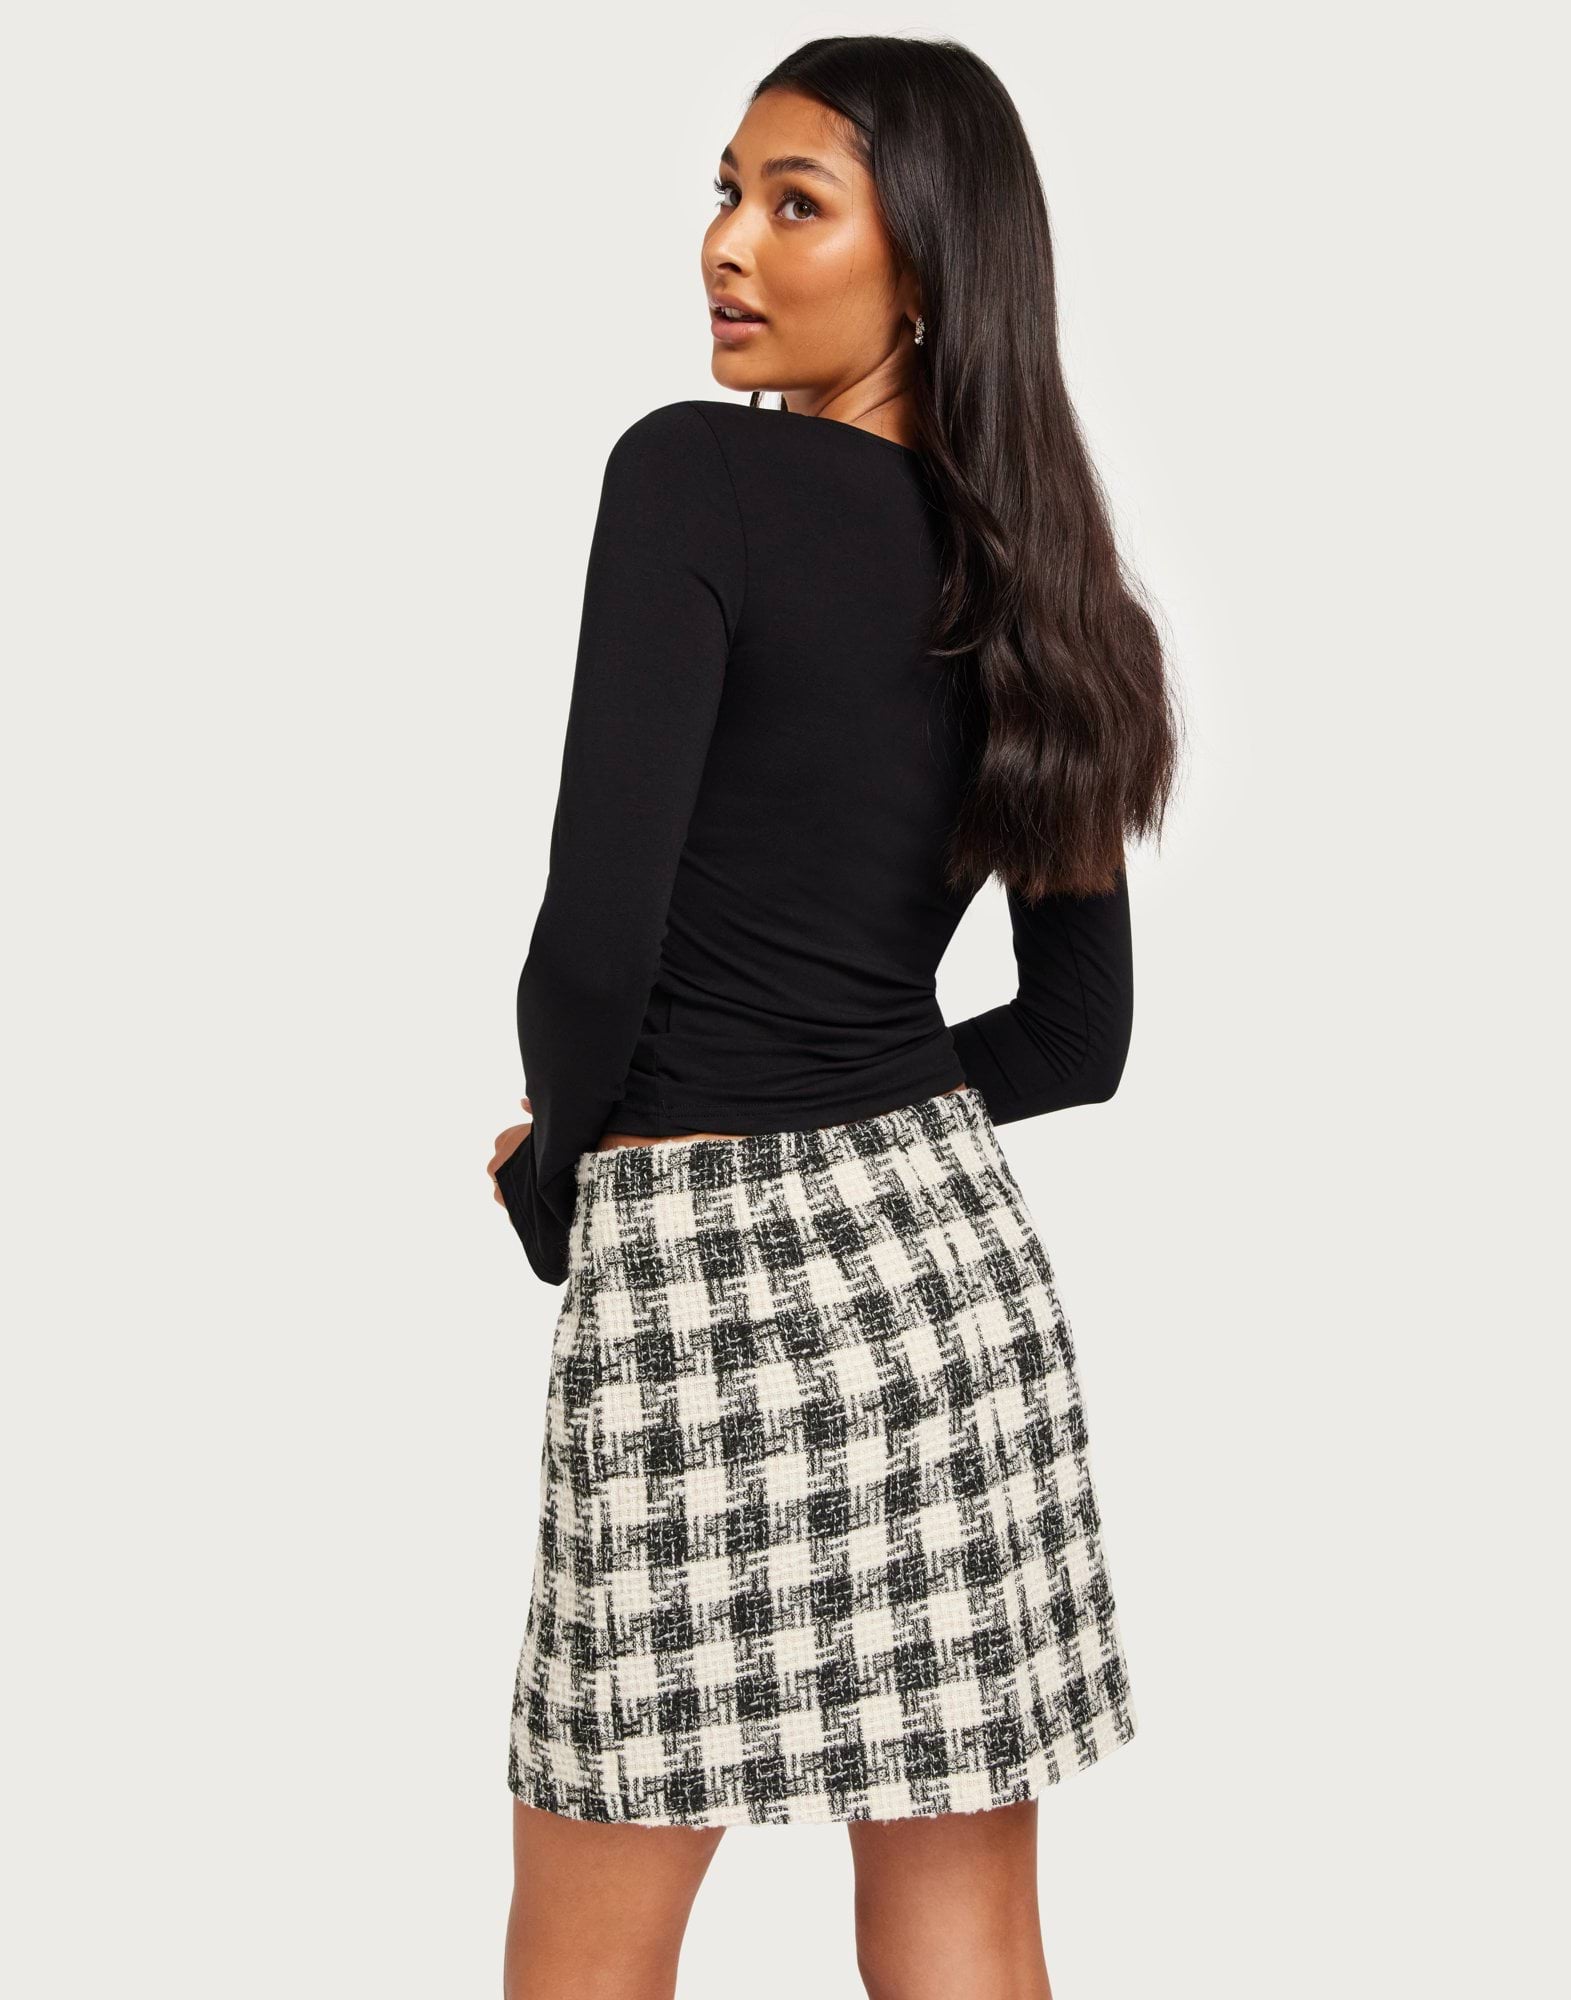 Helmine Chic Boucle Skirt